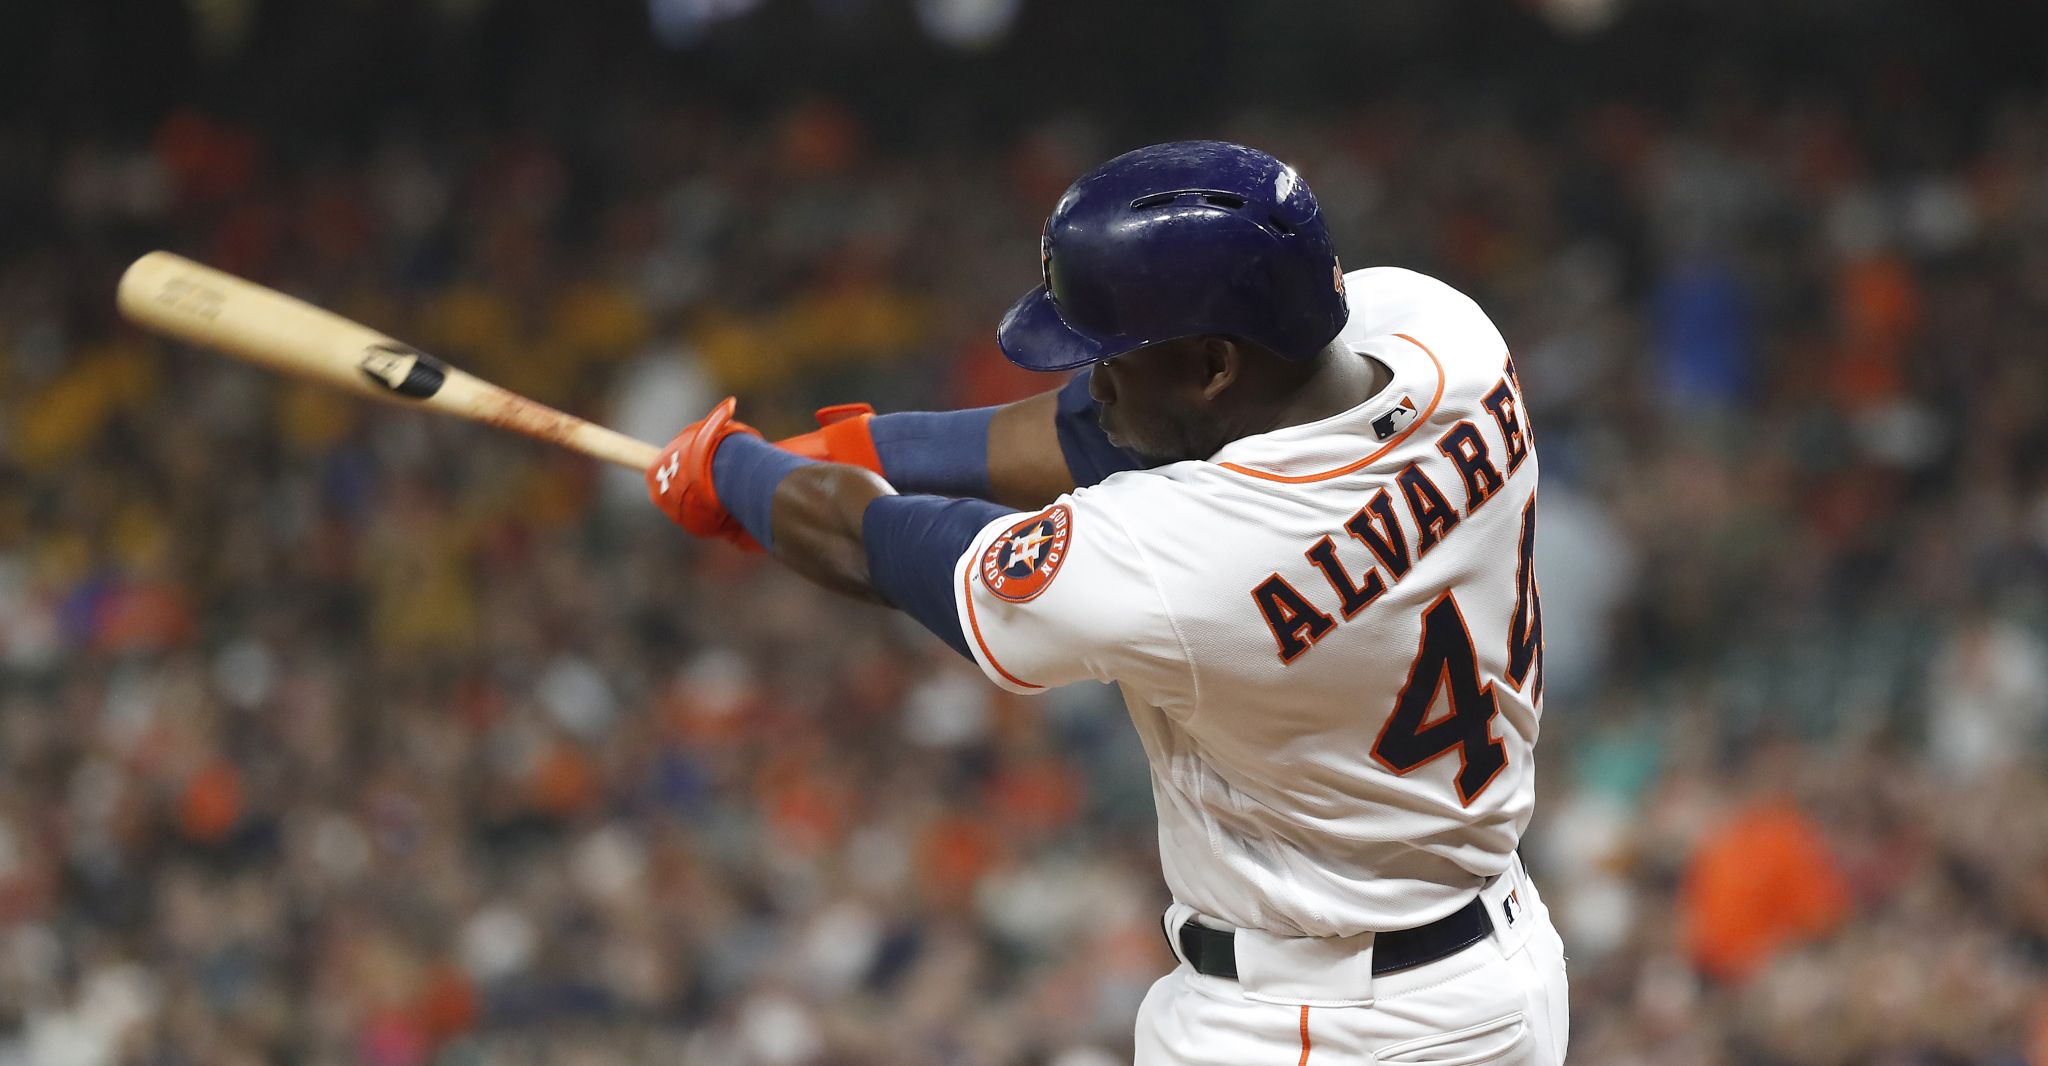 Houston Astros: Yordan Alvarez adjusting swing in World Series